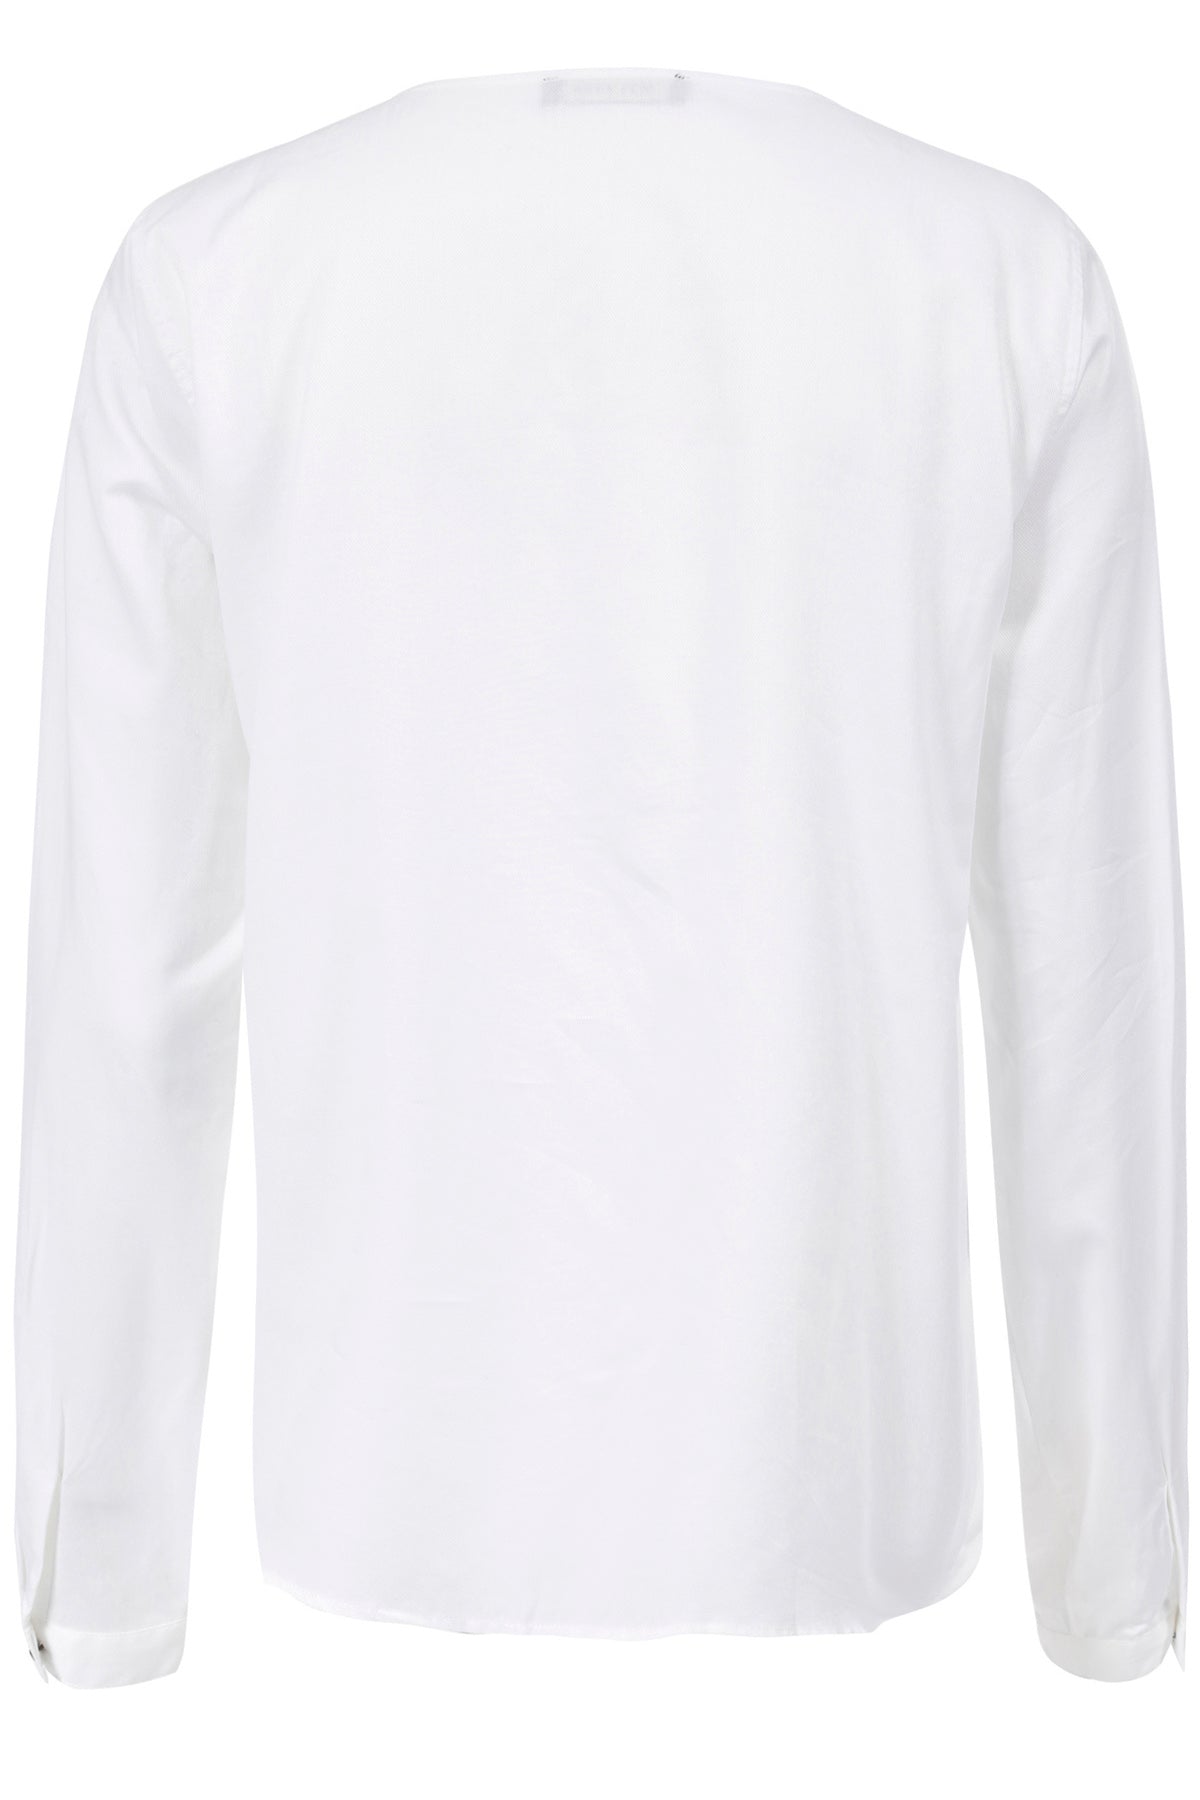 Mos Mosh Maisie Shirt with Ribbon Detail White